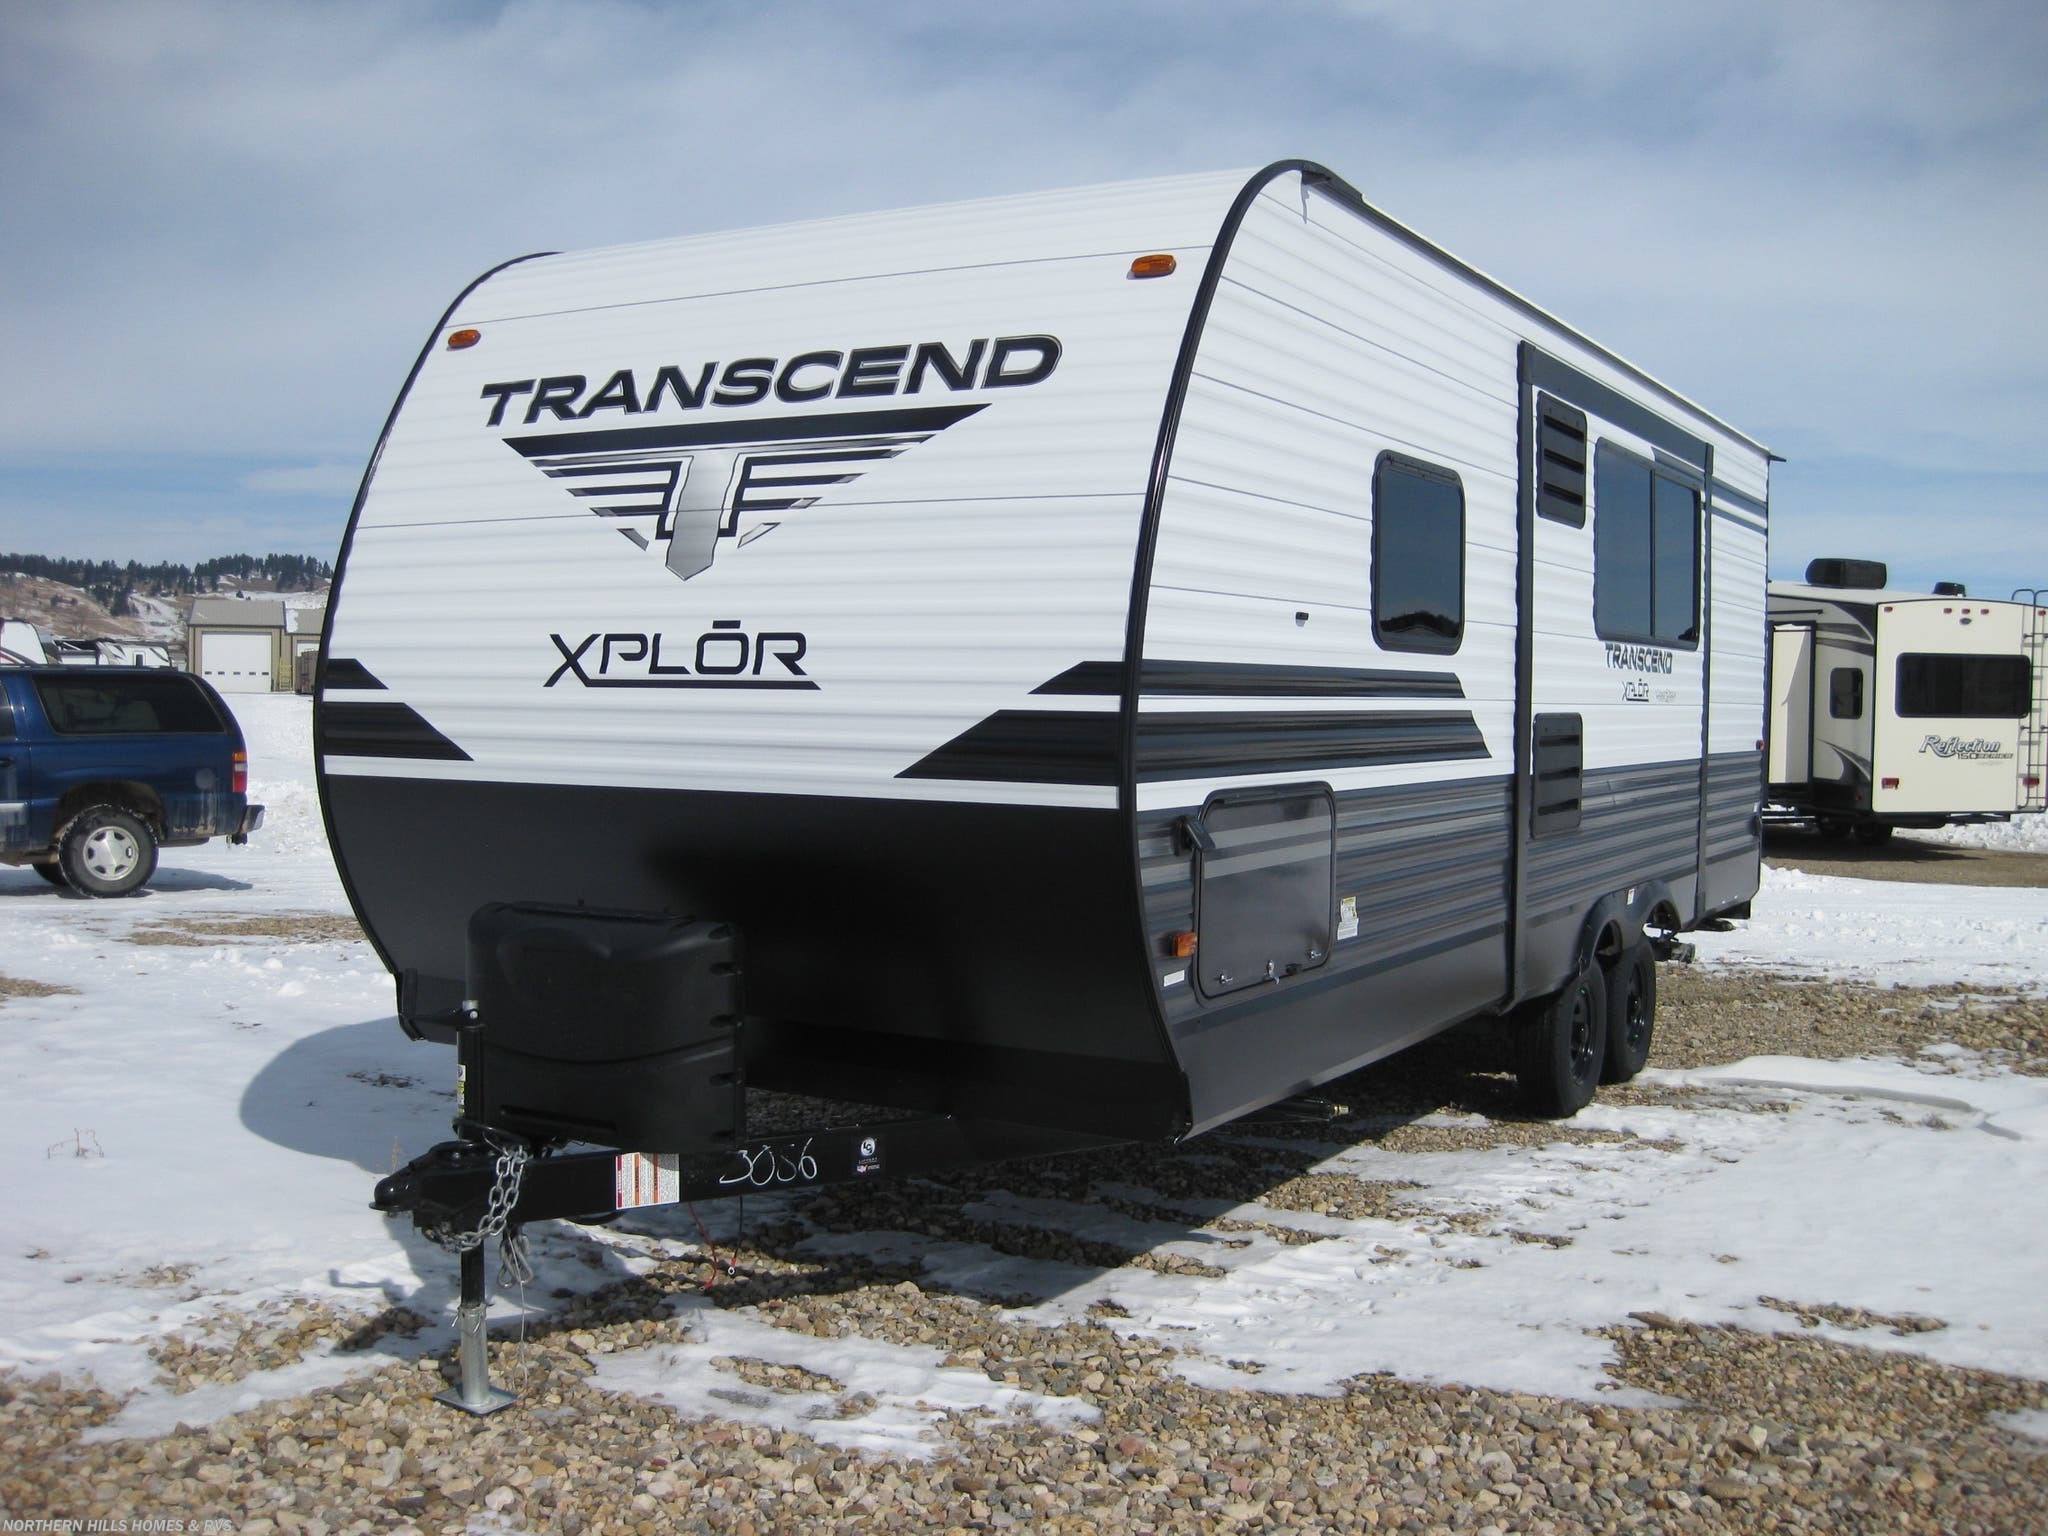 used transcend travel trailer